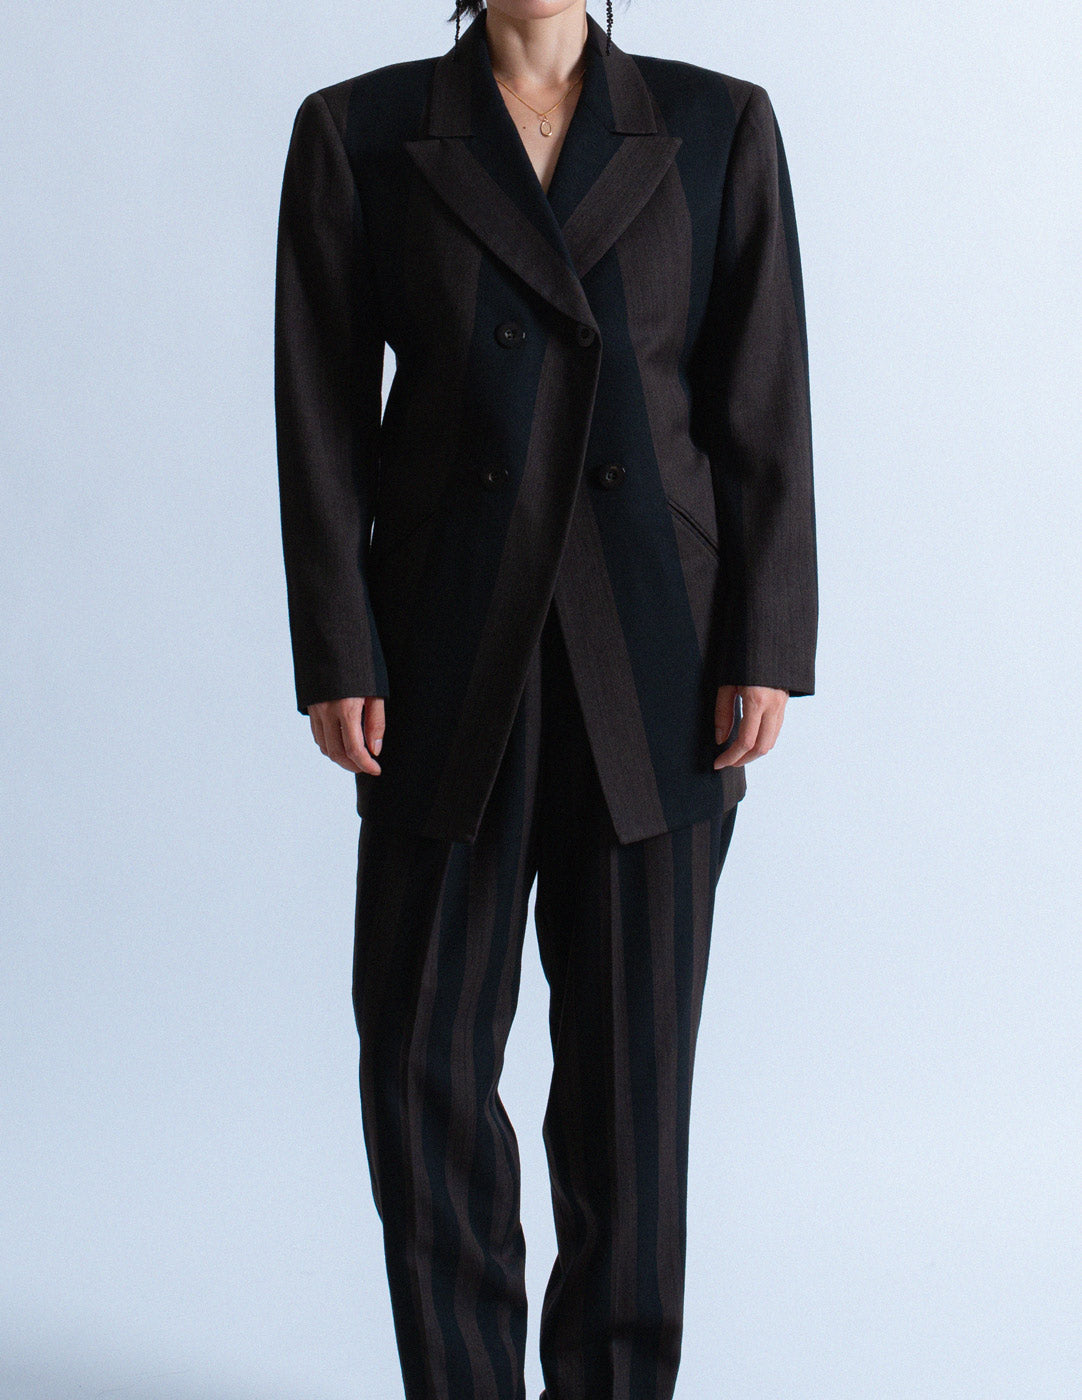 Issey MIyake vintage striped wool suit set front detail